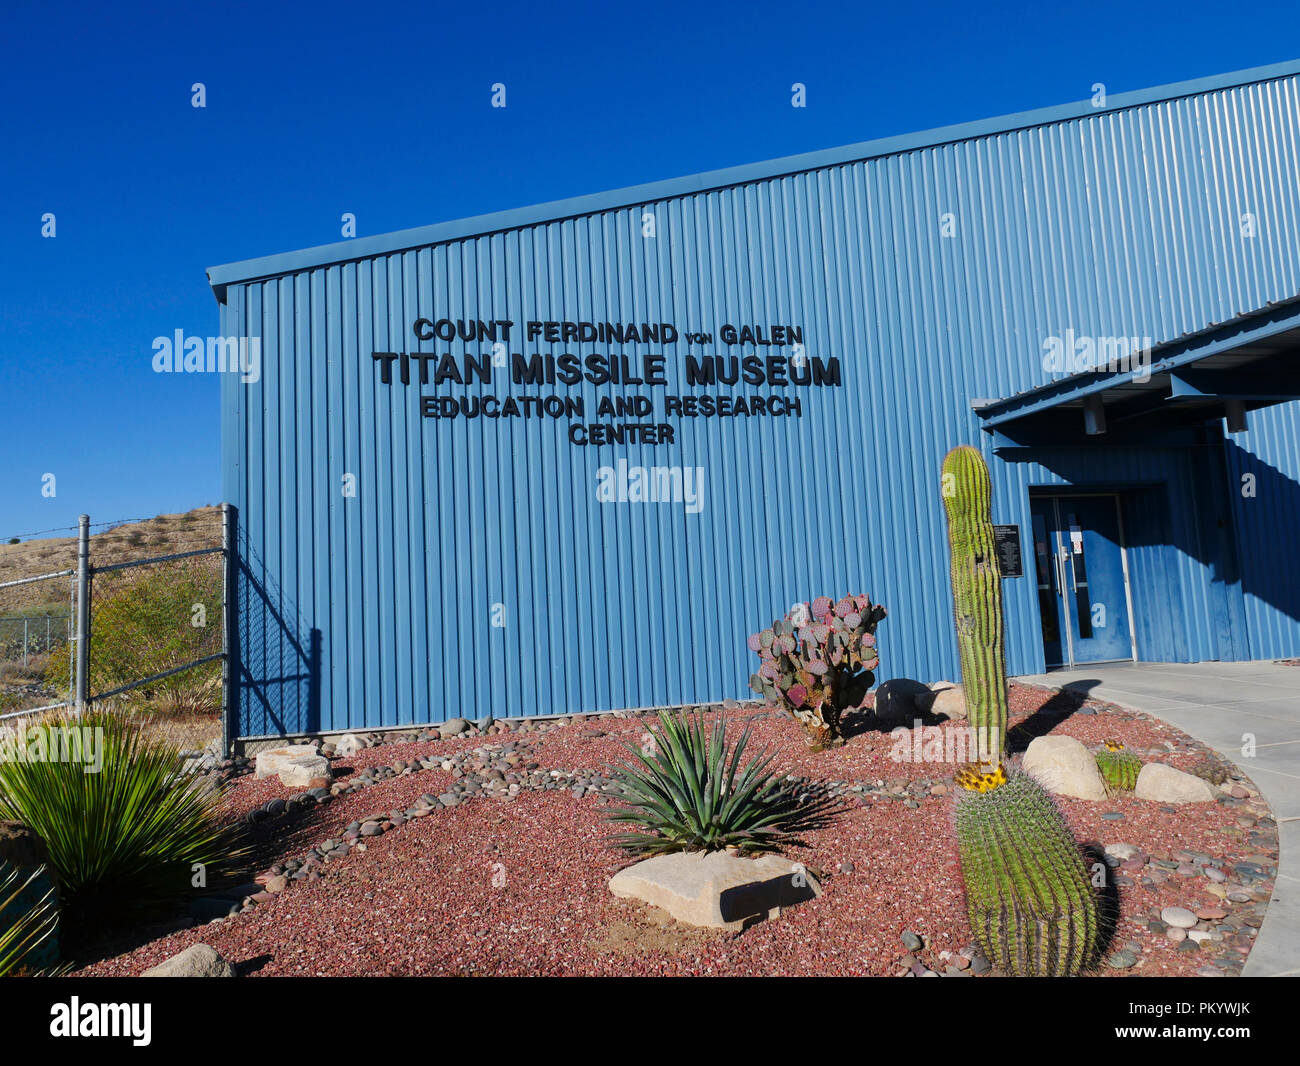 Raketen- und Command Center in der Titan Missile Museum in Tucson, Arizona. Stockfoto